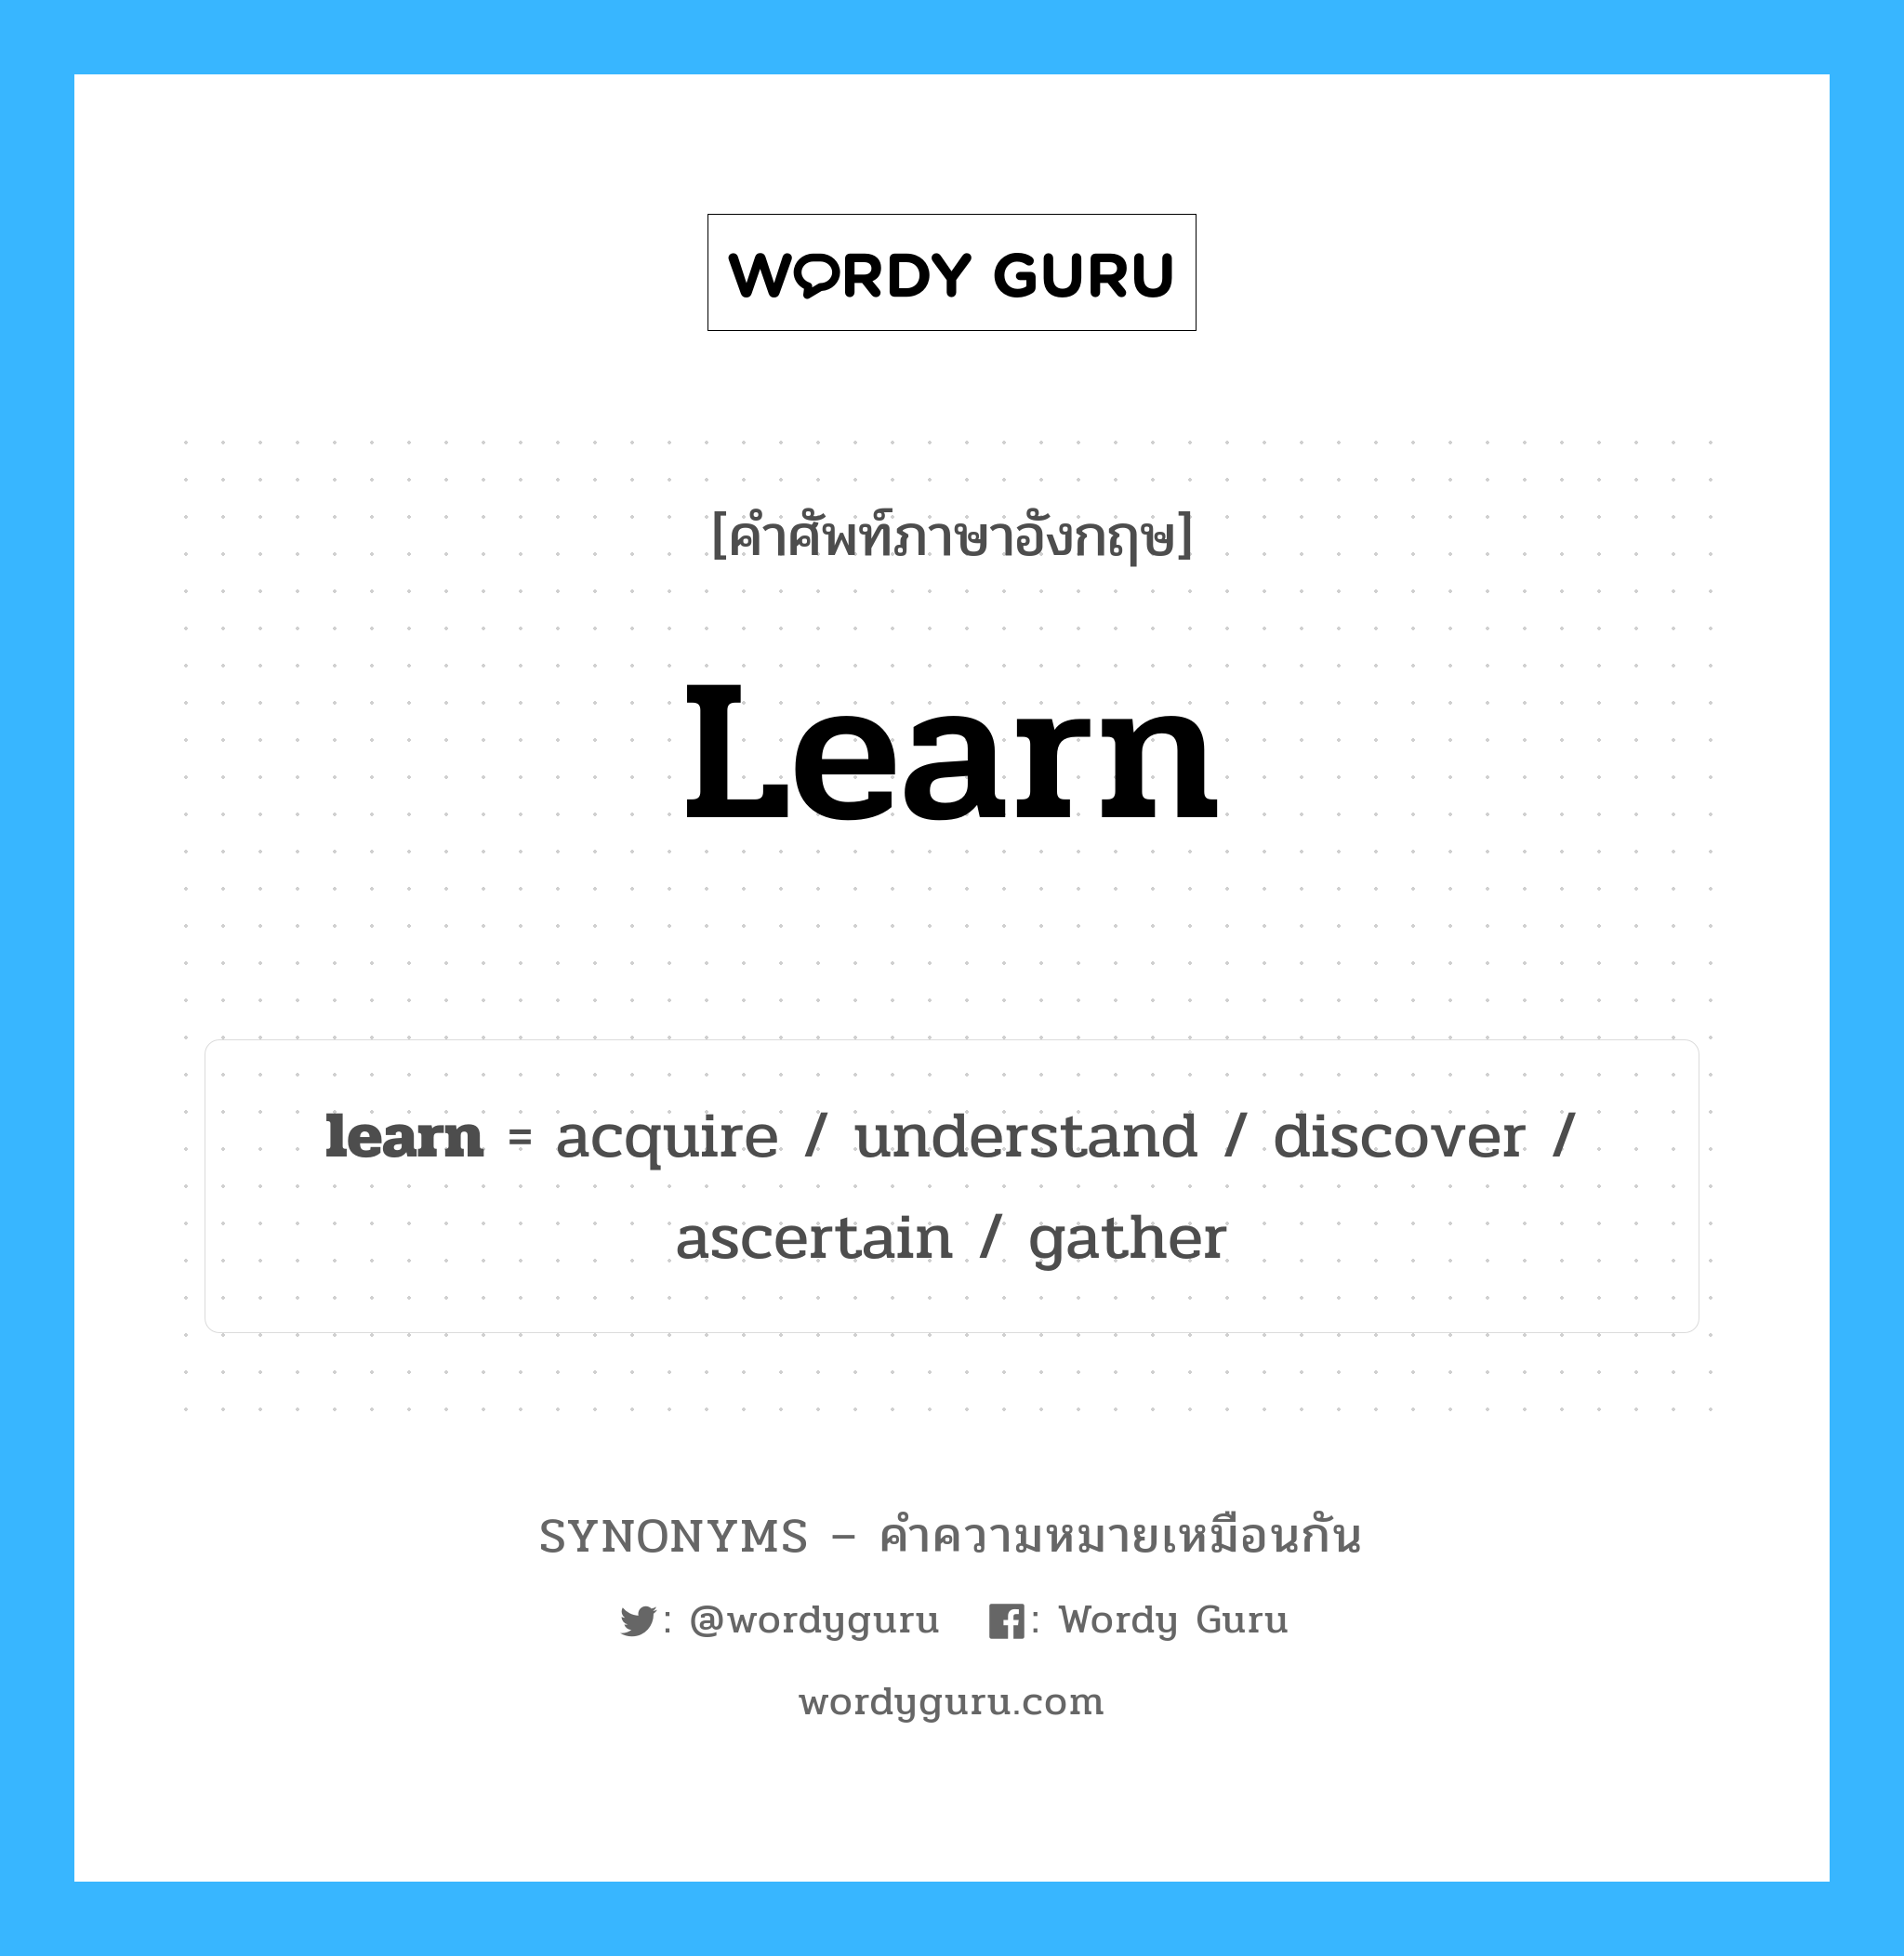 understand เป็นหนึ่งใน learn และมีคำอื่น ๆ อีกดังนี้, คำศัพท์ภาษาอังกฤษ understand ความหมายคล้ายกันกับ learn แปลว่า ทำความเข้าใจ หมวด learn